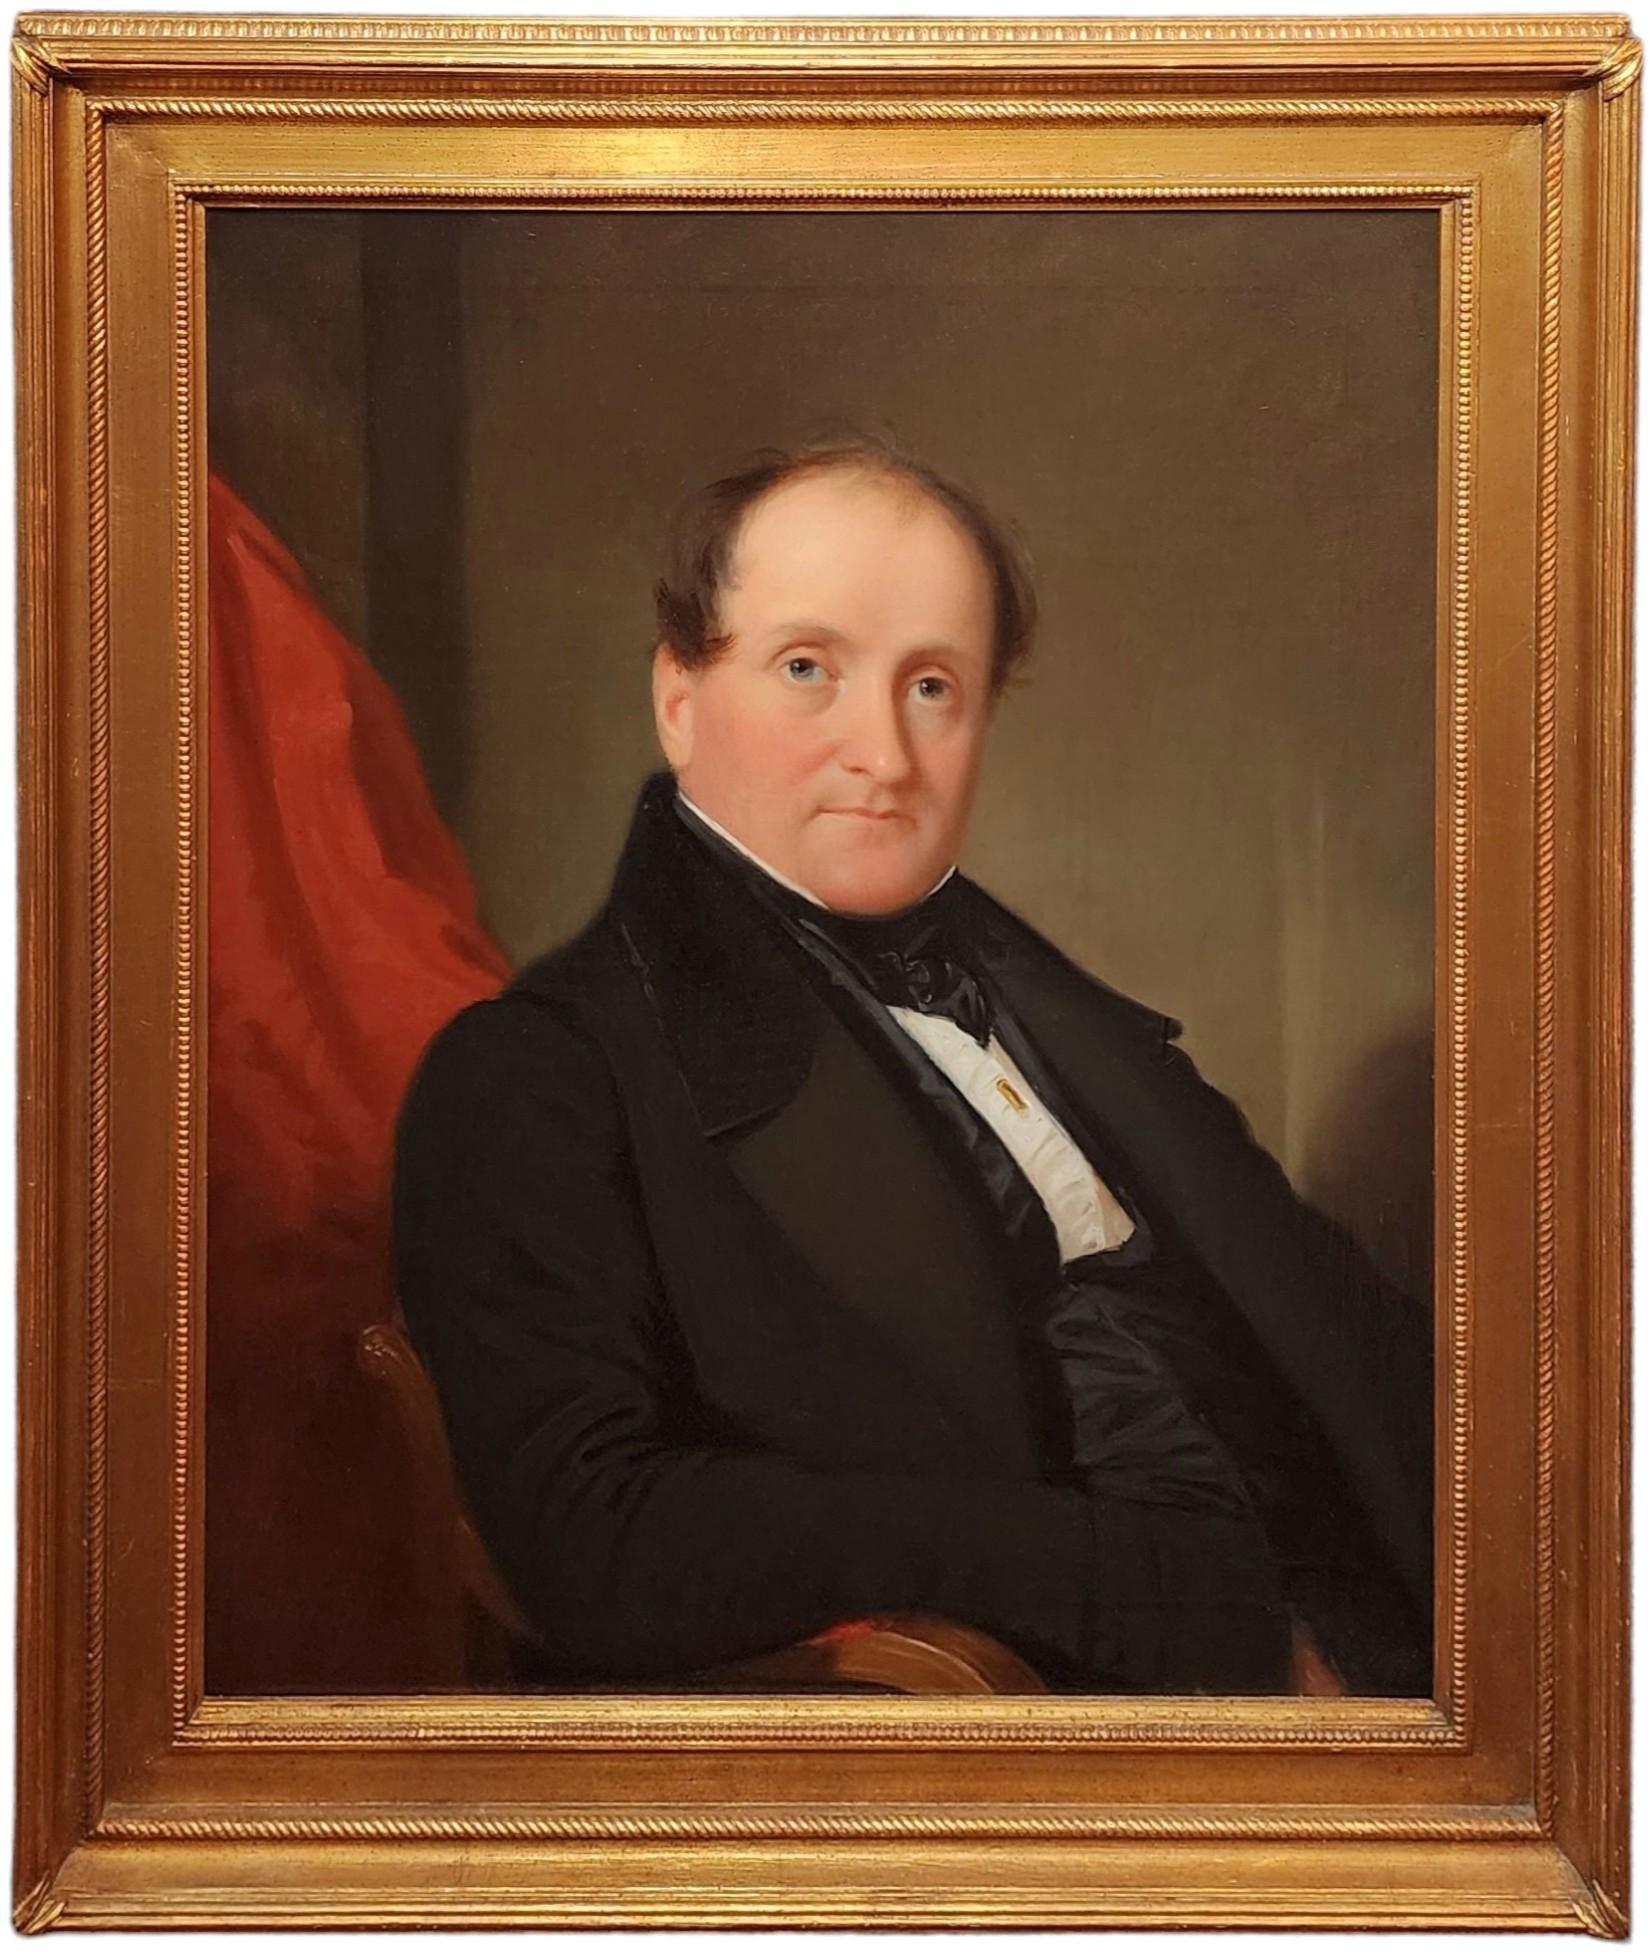 John F Francis Portrait Painting - Portrait of a Gentleman, Early American Portraiture, 1830s Portrait of a Man